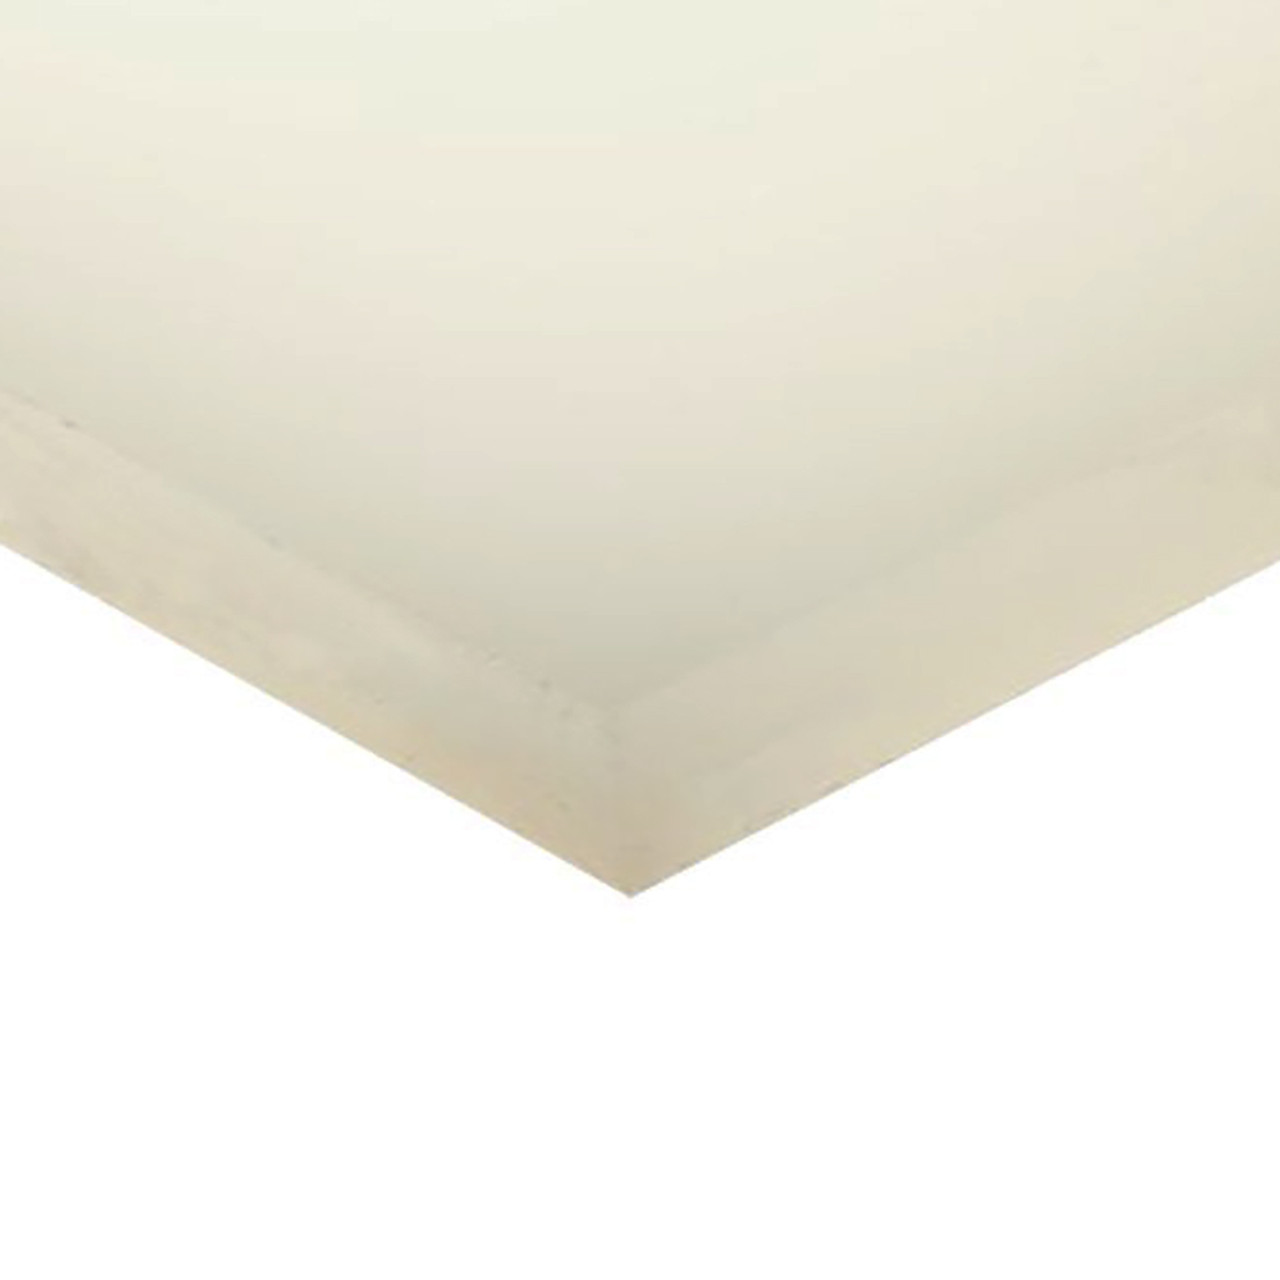 1" x 24" x 48", Polypropylene Plastic Sheet, Natural